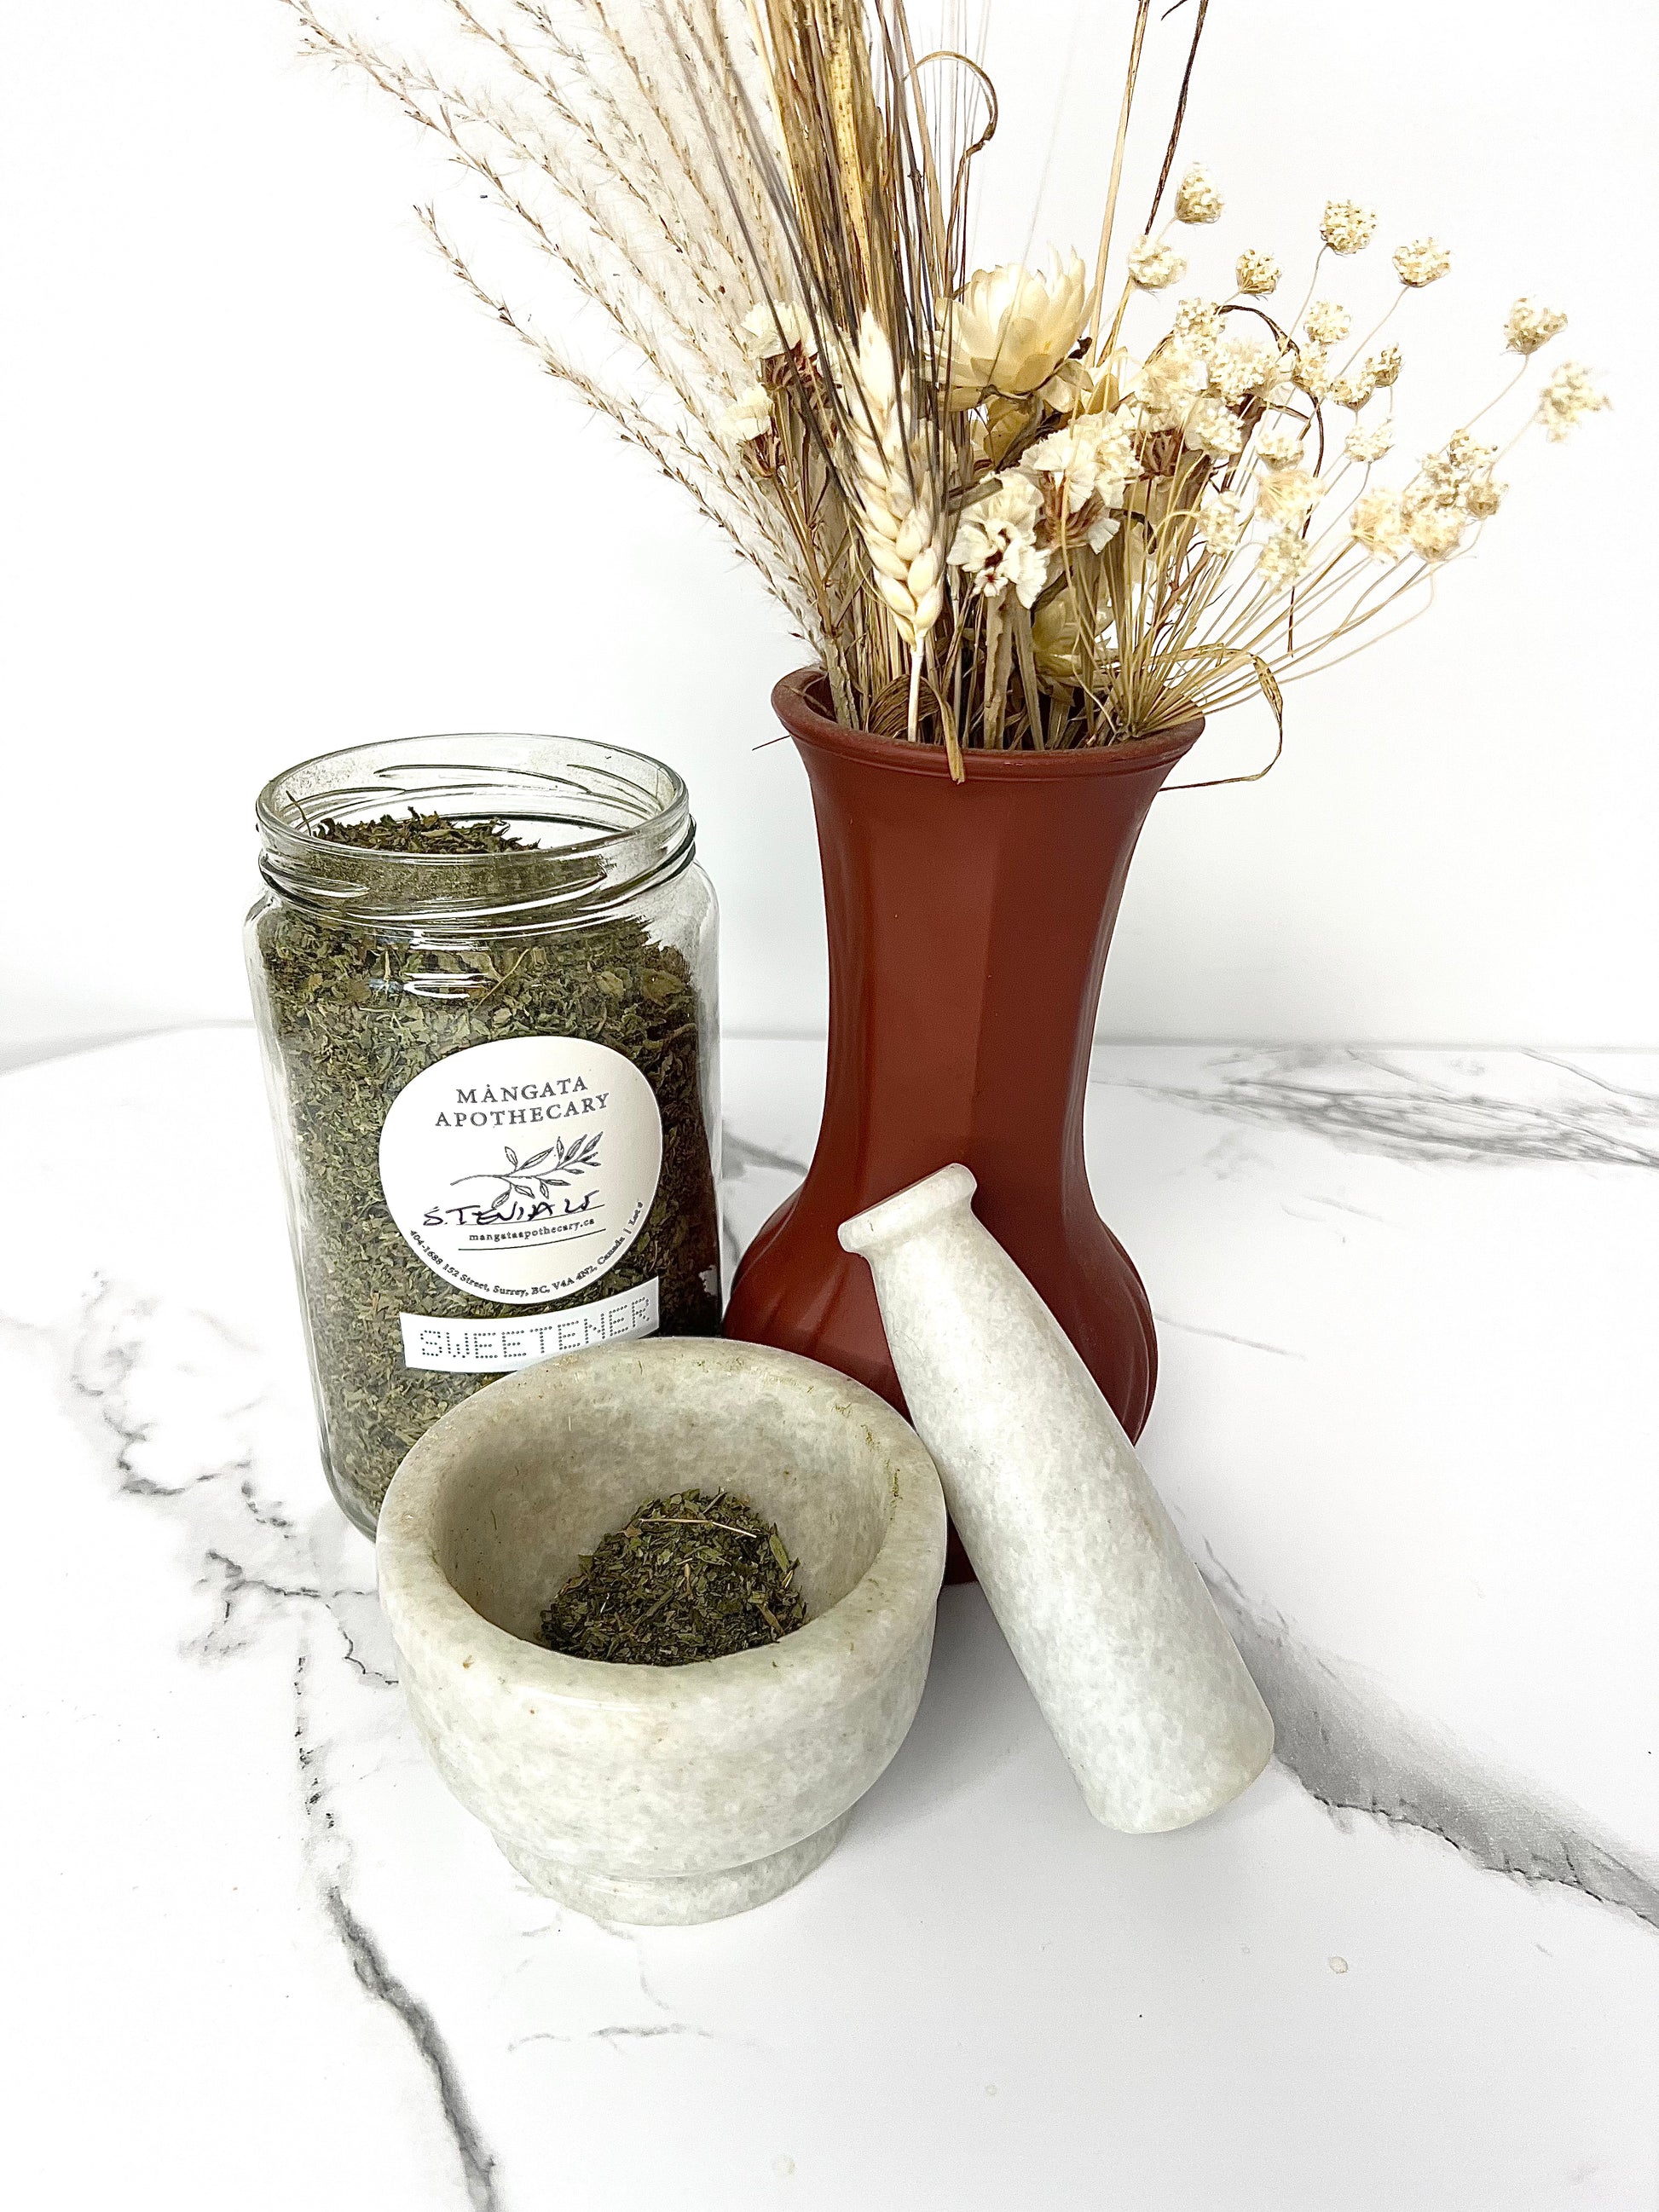 Stevia Leaf Herb - Product Image For Mangata Dispensary